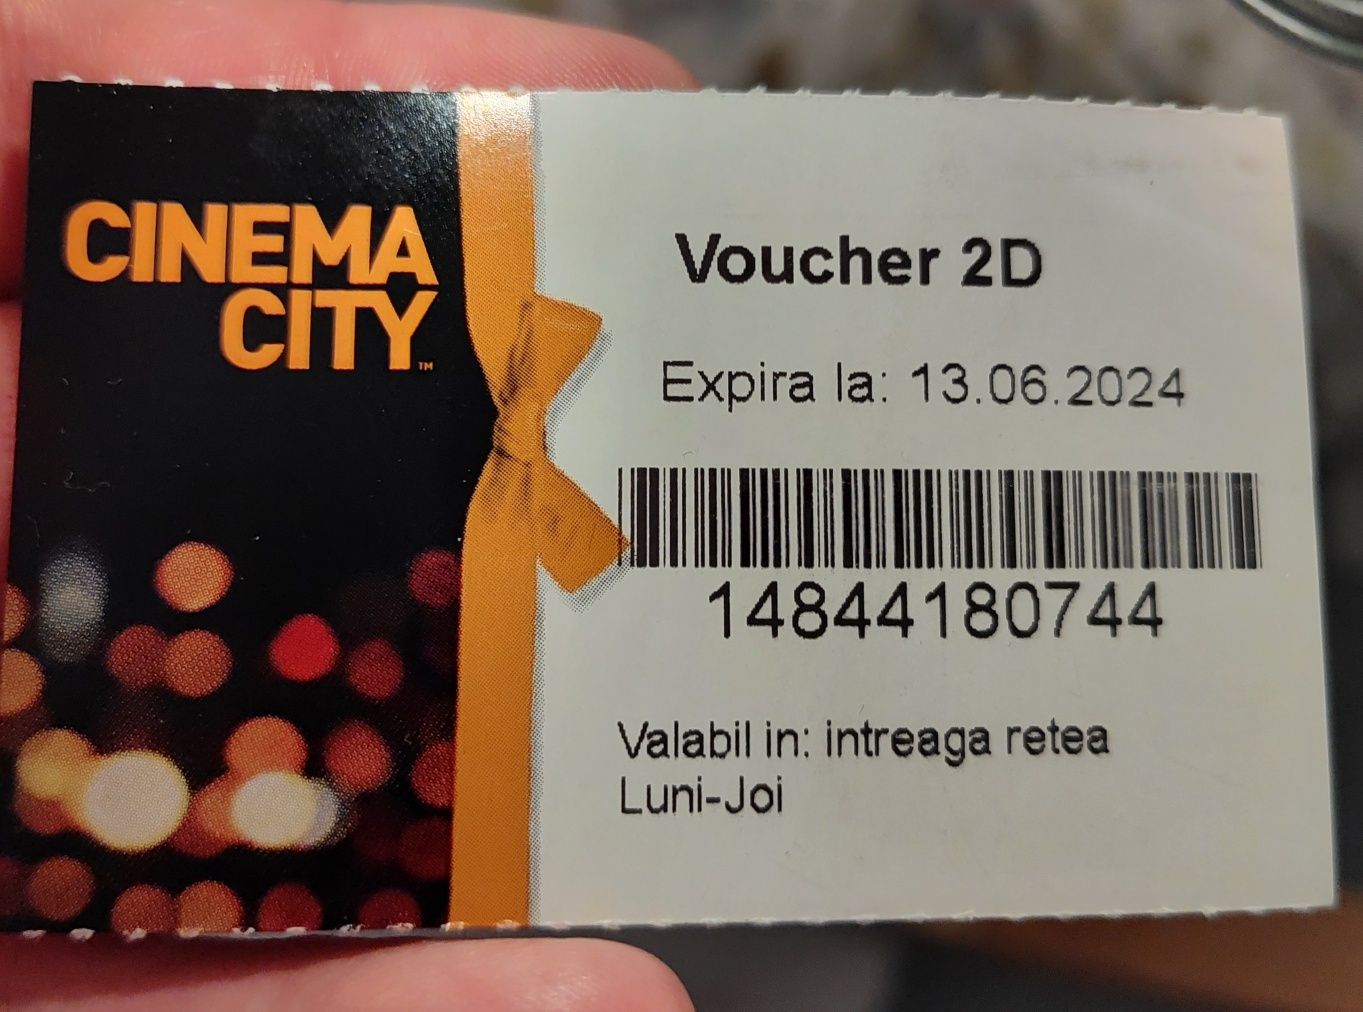 4 x Voucher film 2D Cinema City Iași